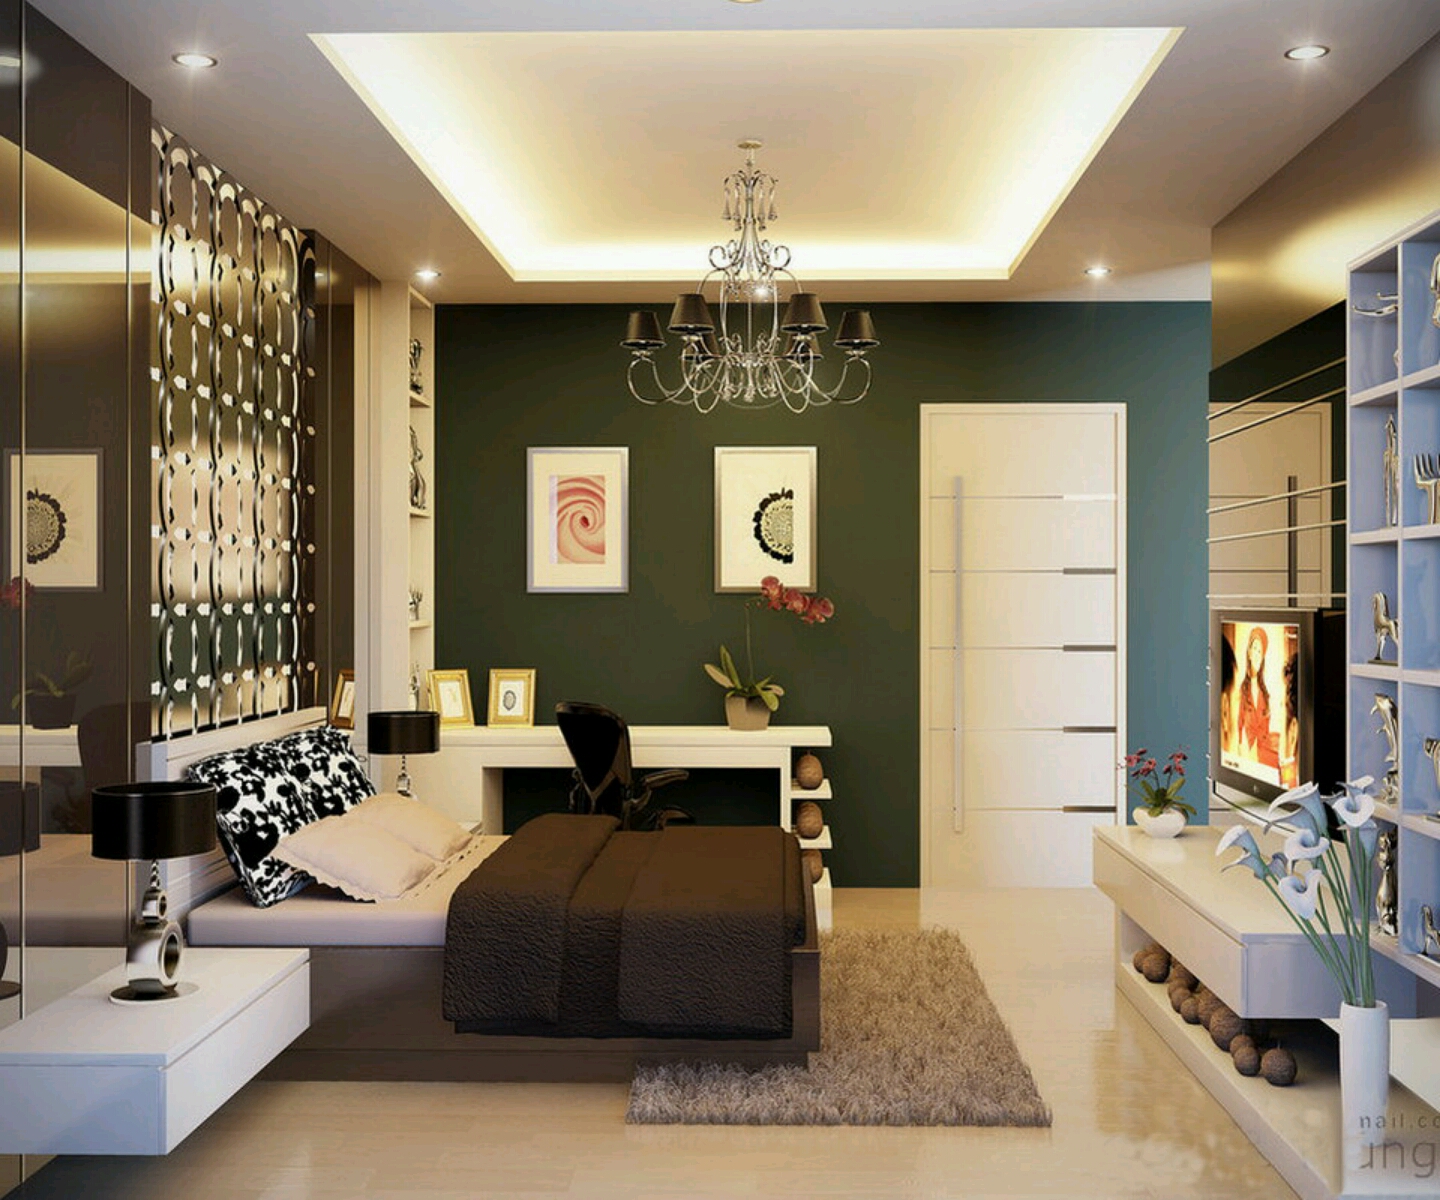 New home  designs  latest Modern bedrooms  designs  best  ideas  